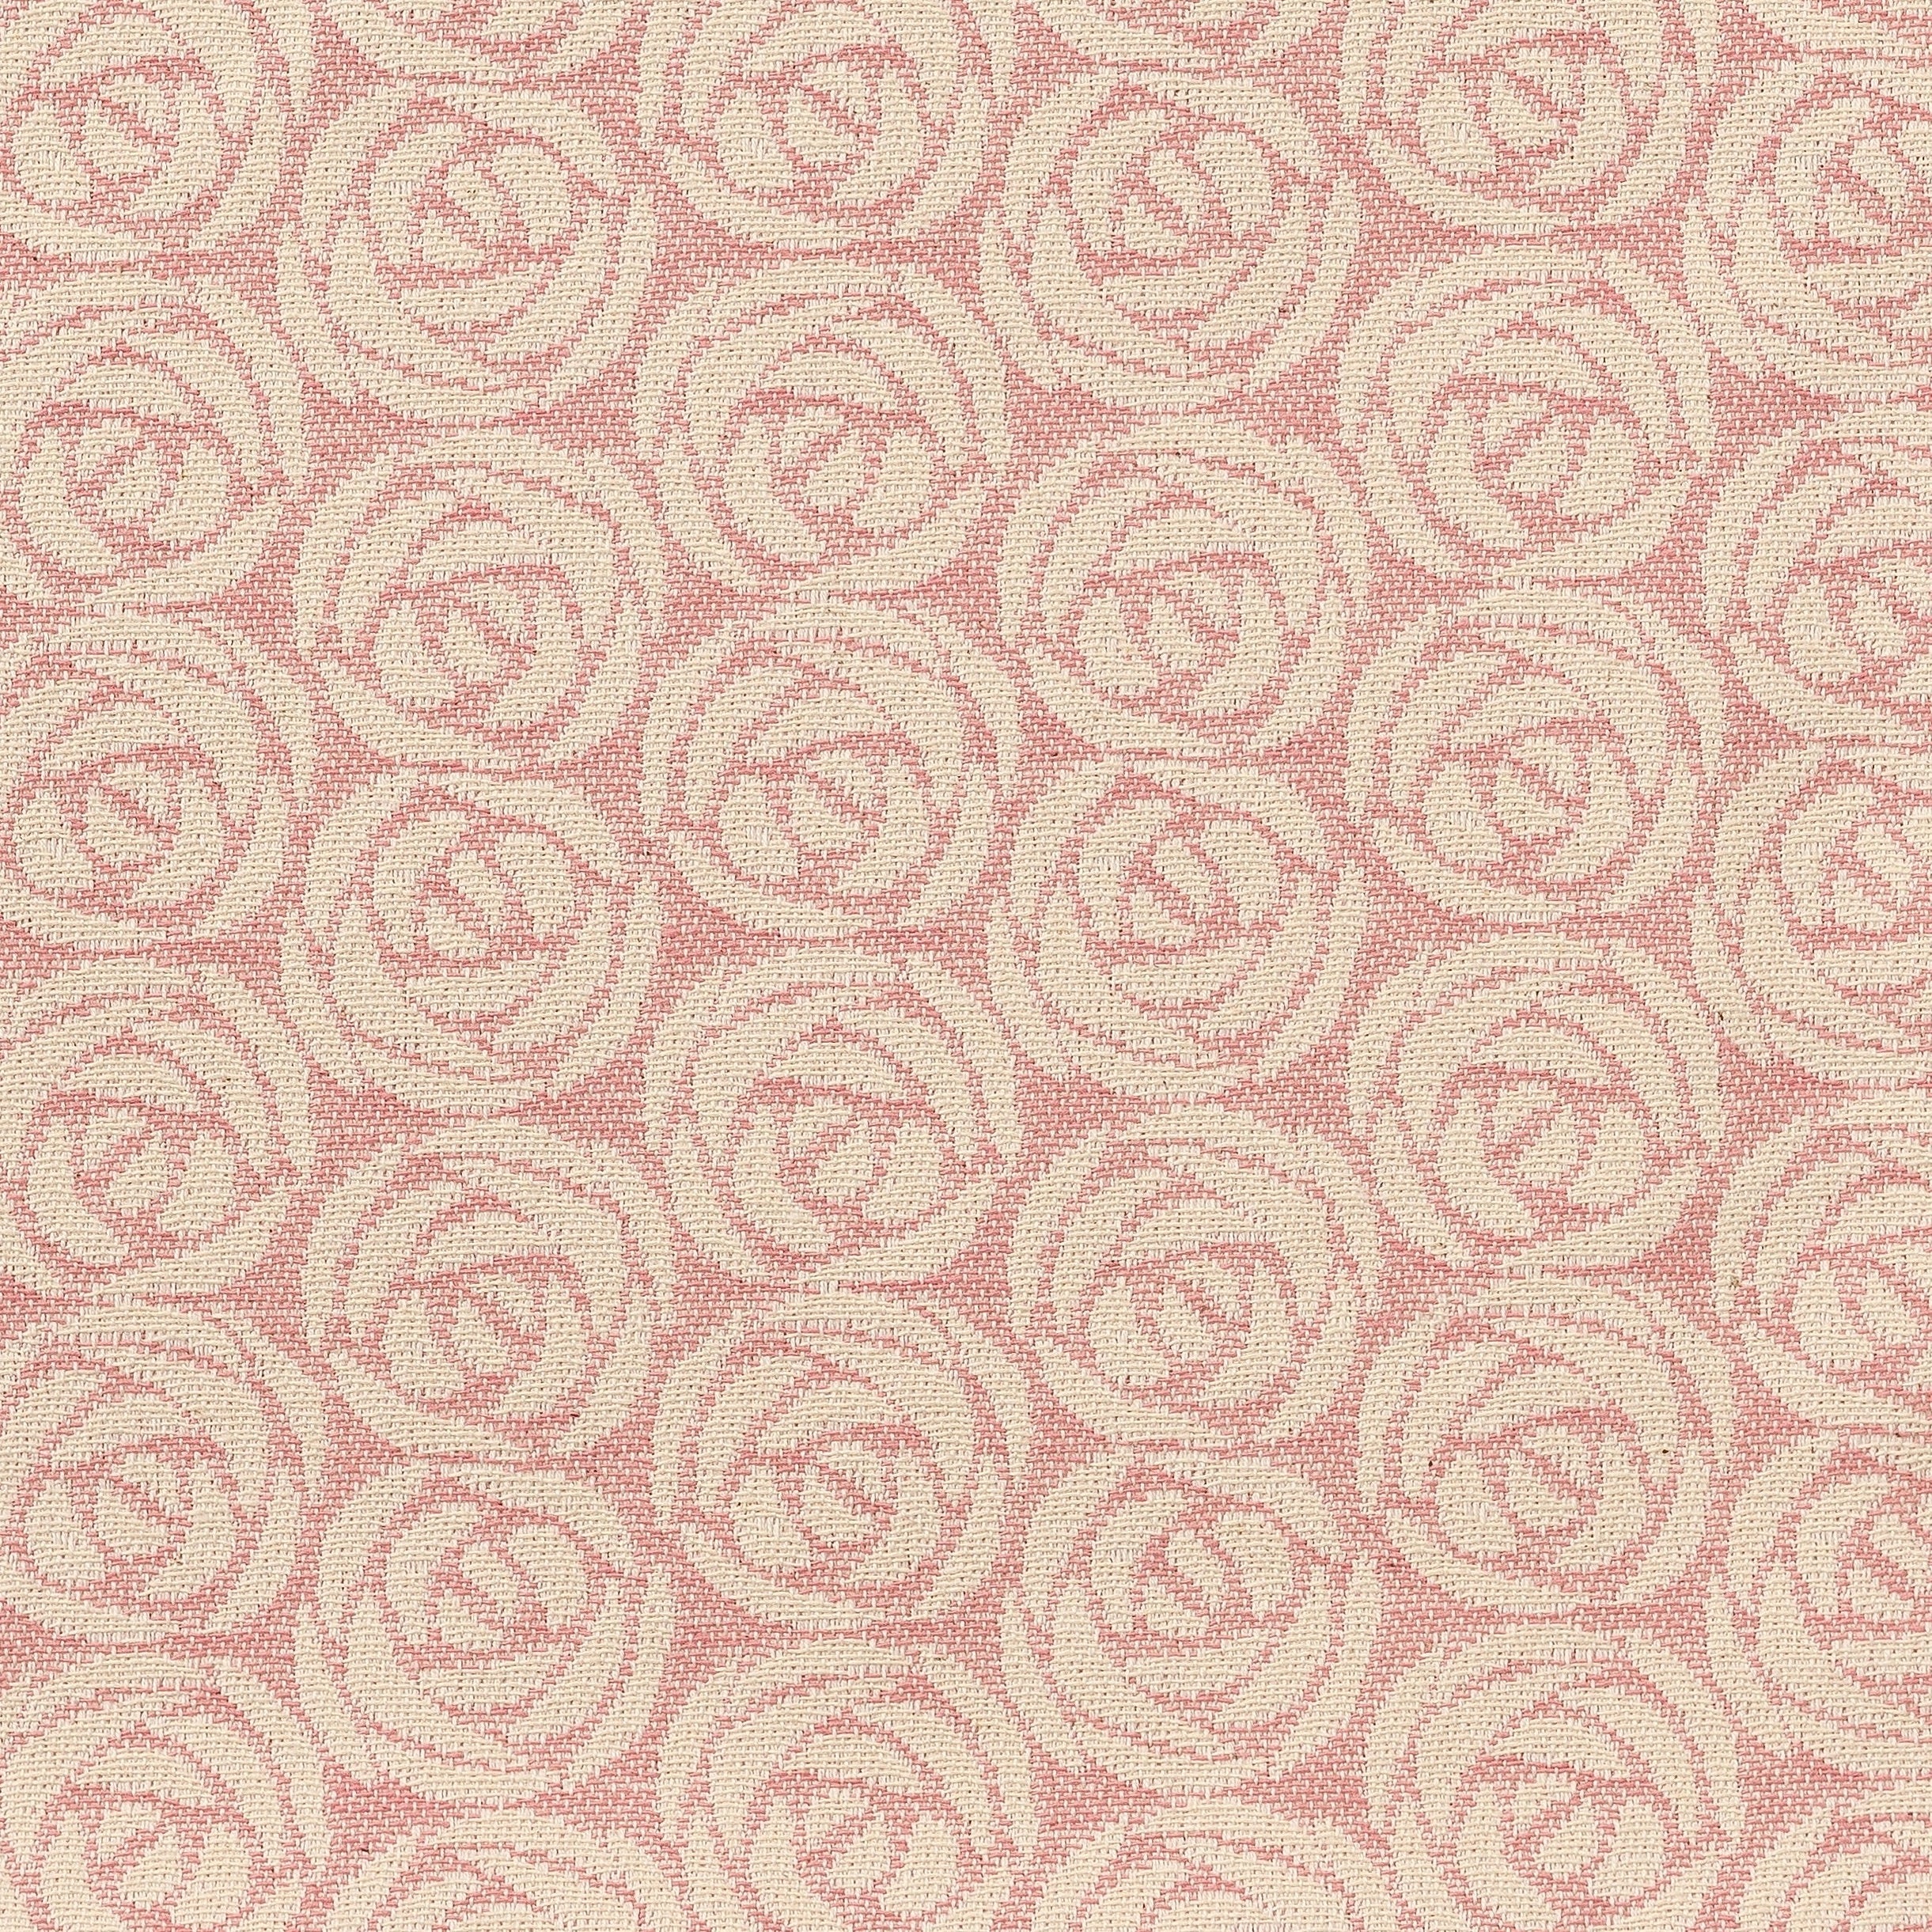 Rose Cotton Fabric Rose sample